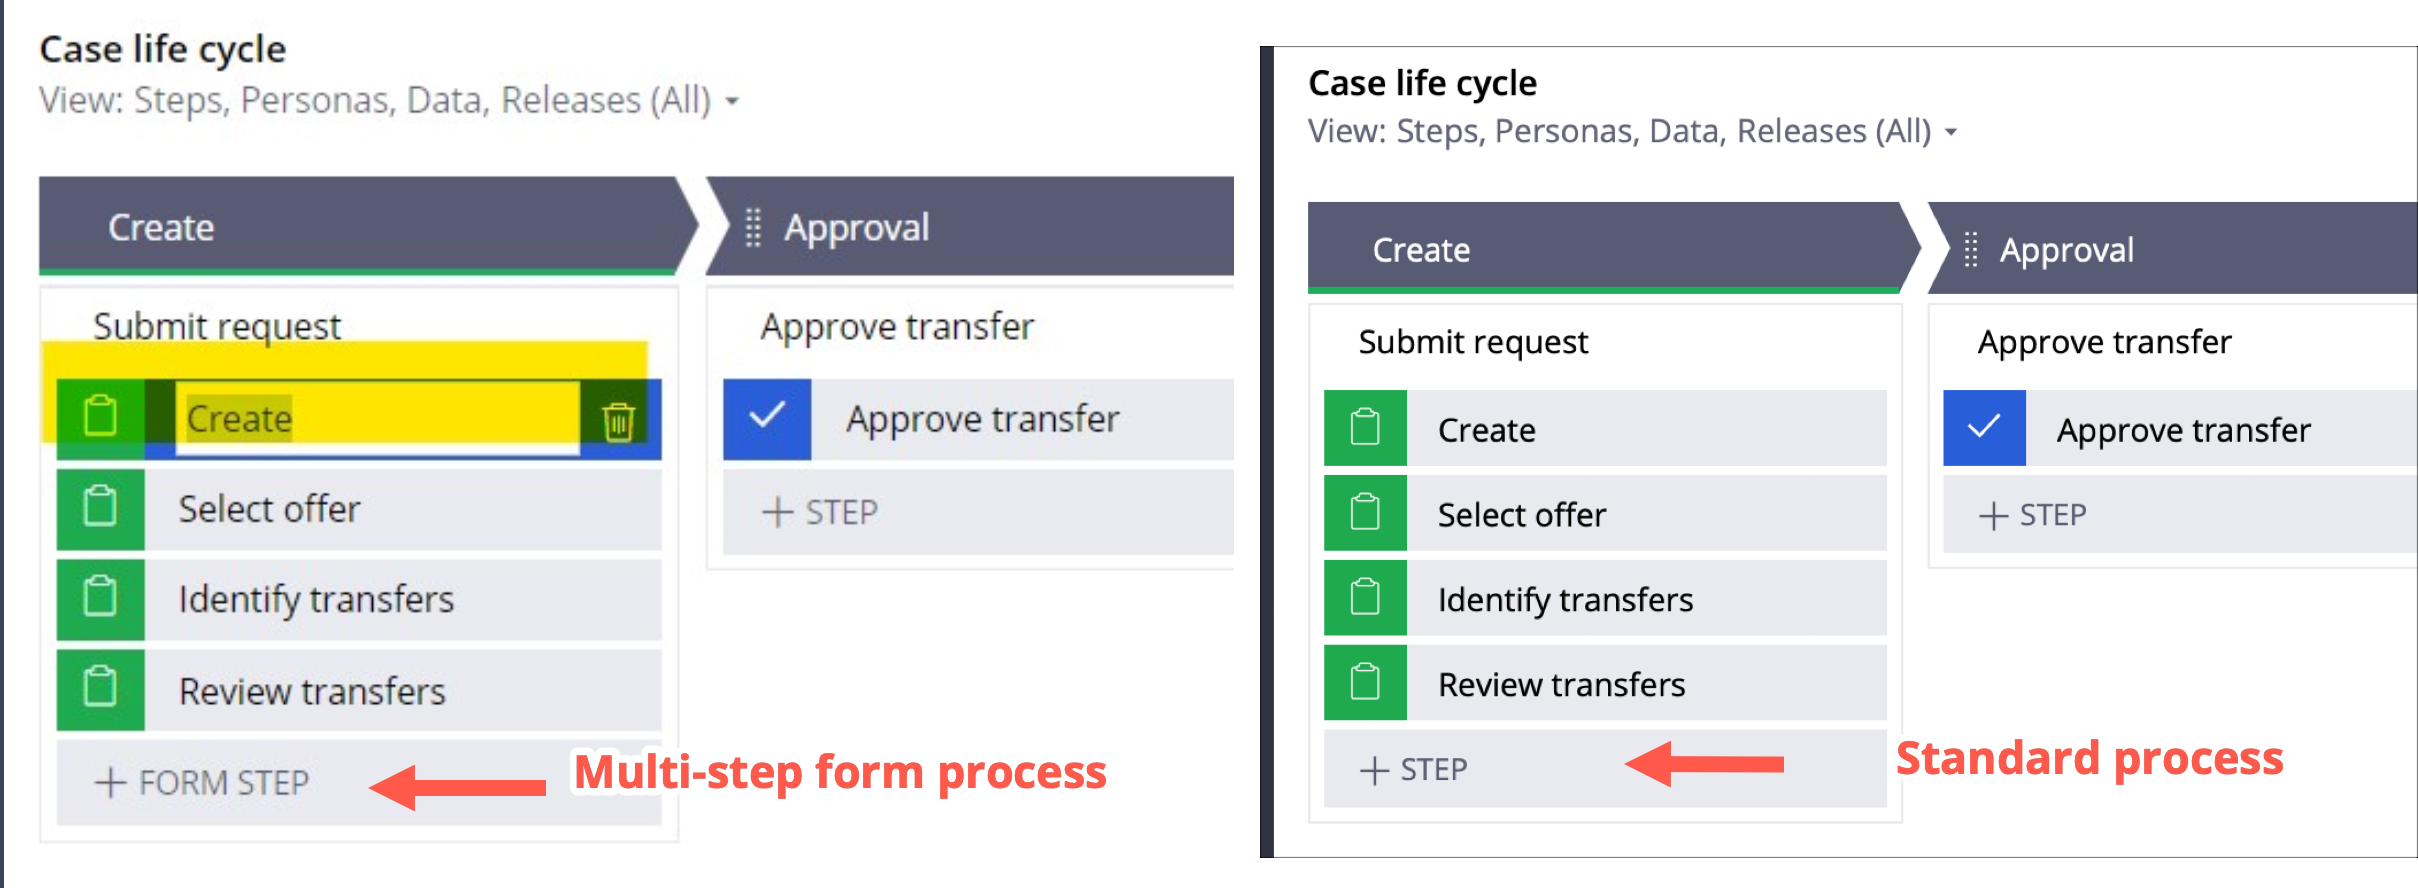 Multi-step form vs standard process